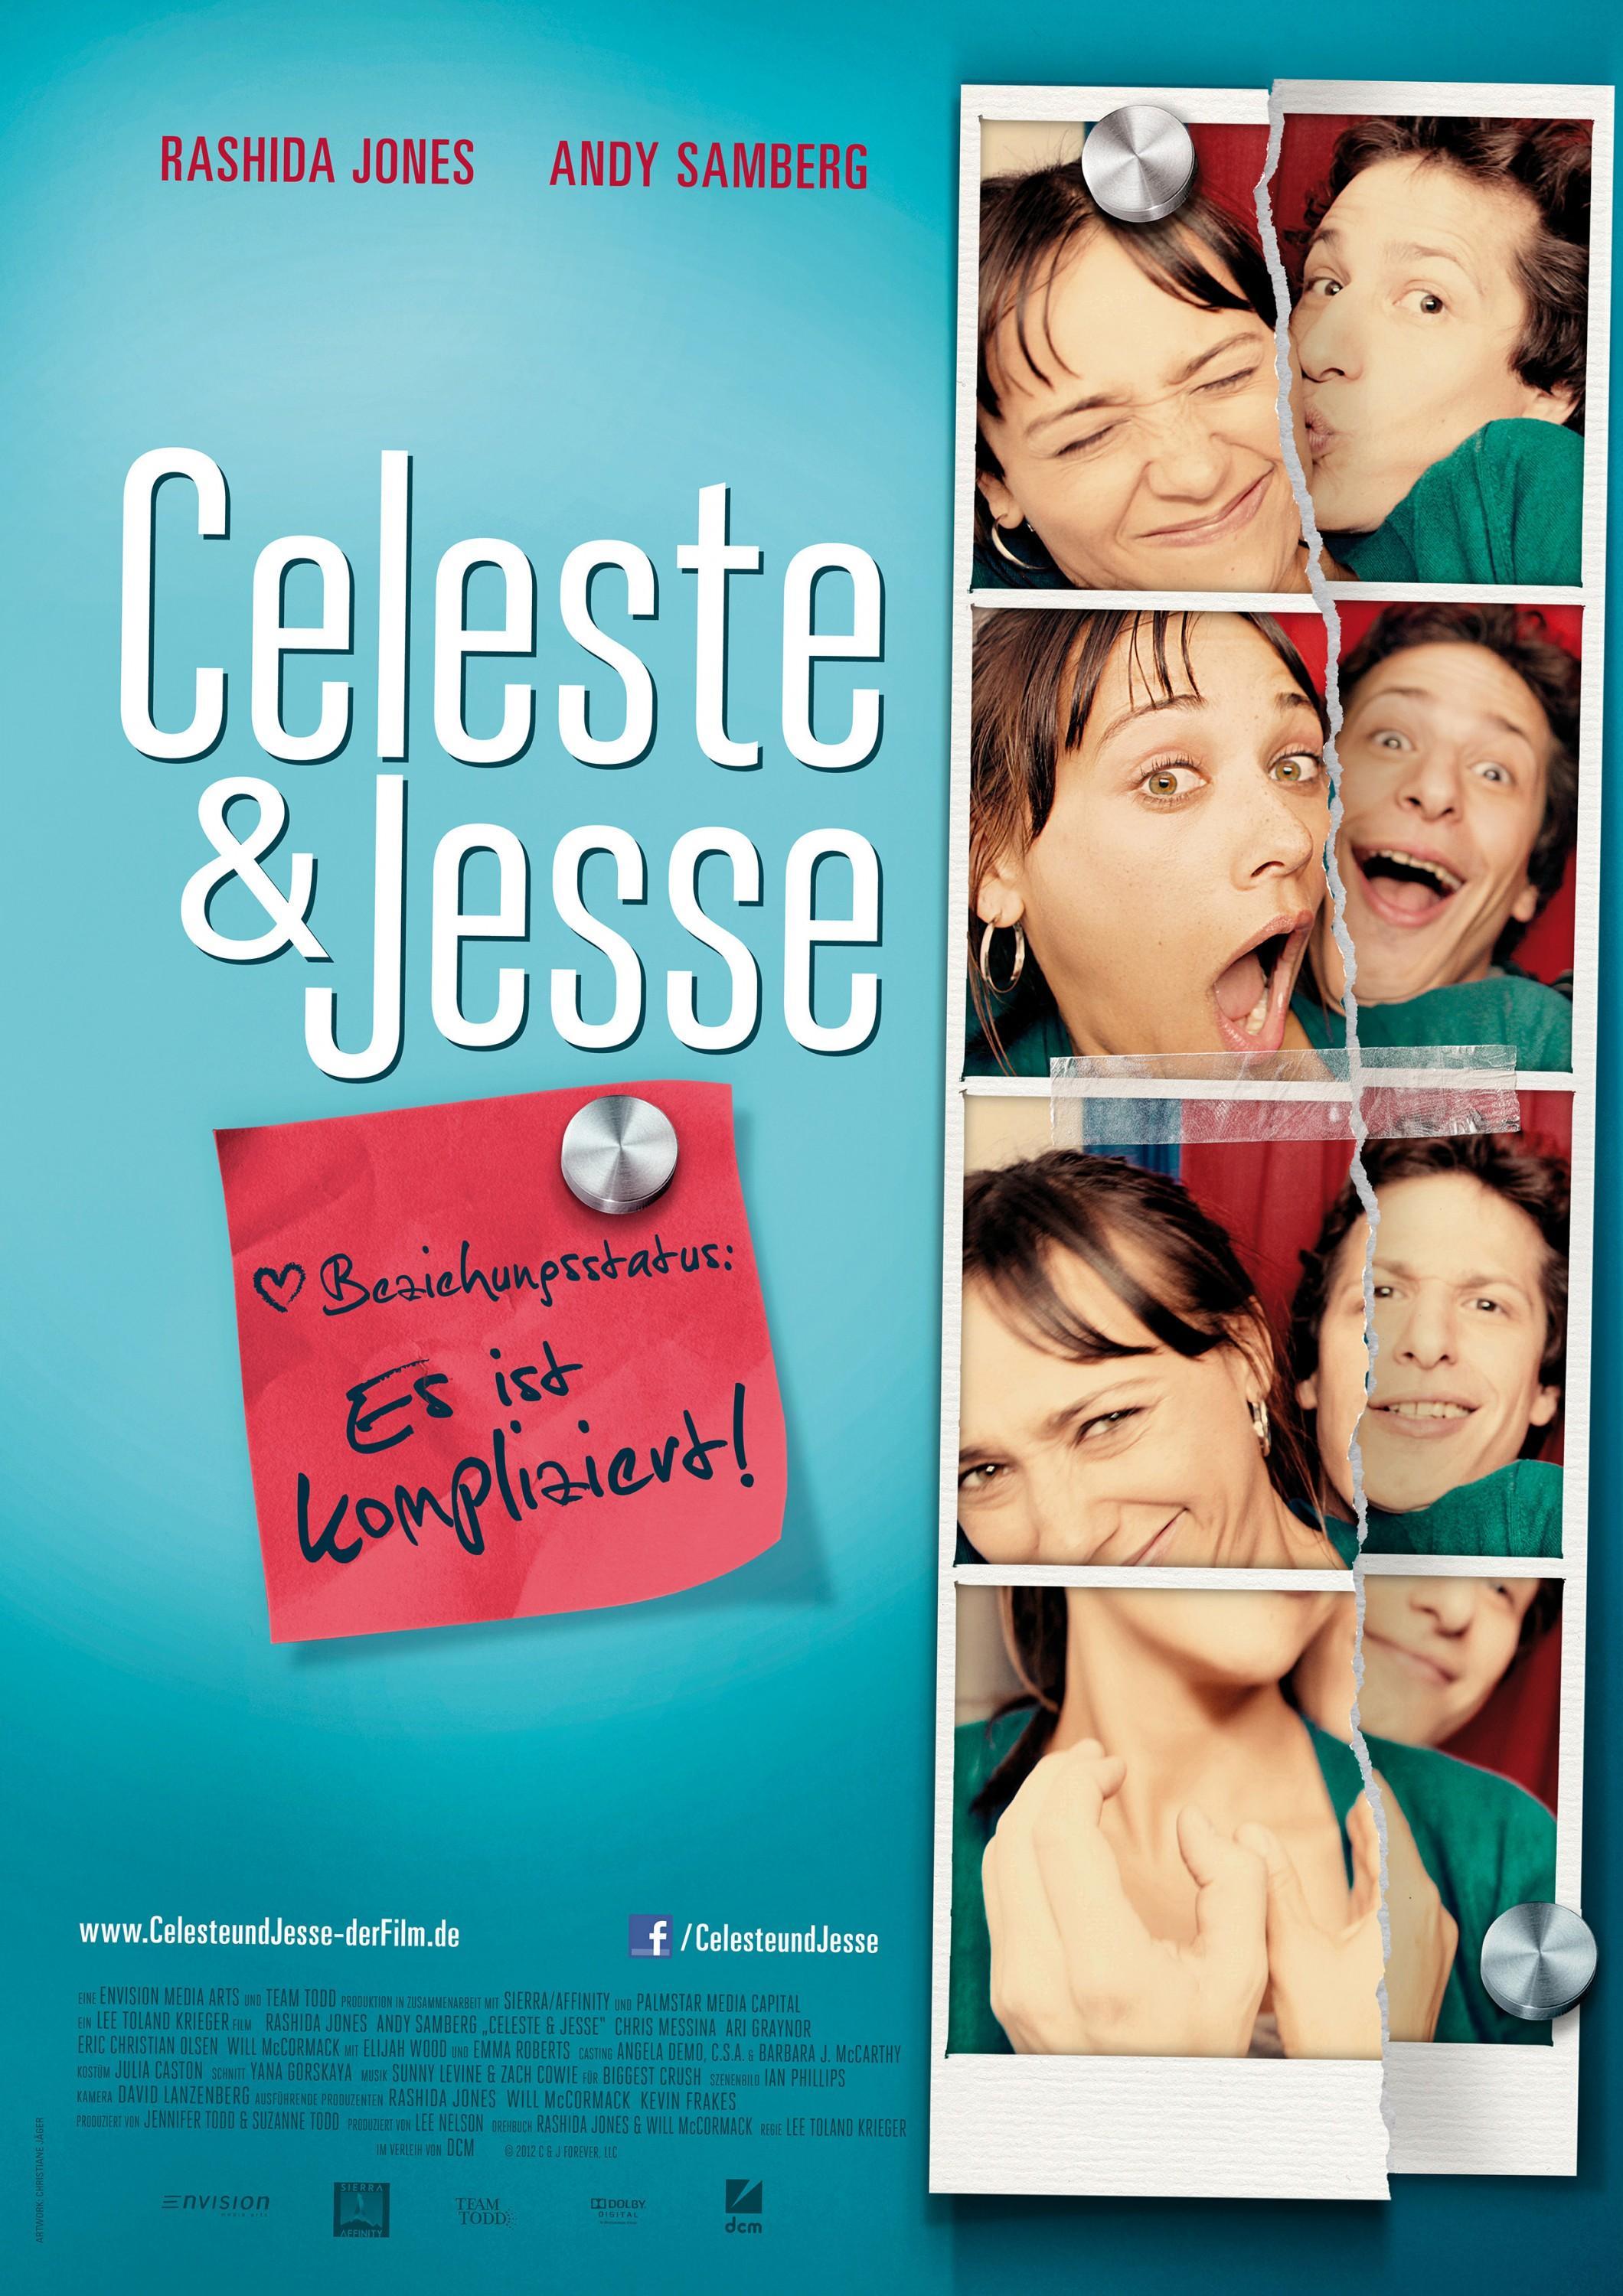 Постер фильма Селеста и Джесси навеки | Celeste & Jesse Forever